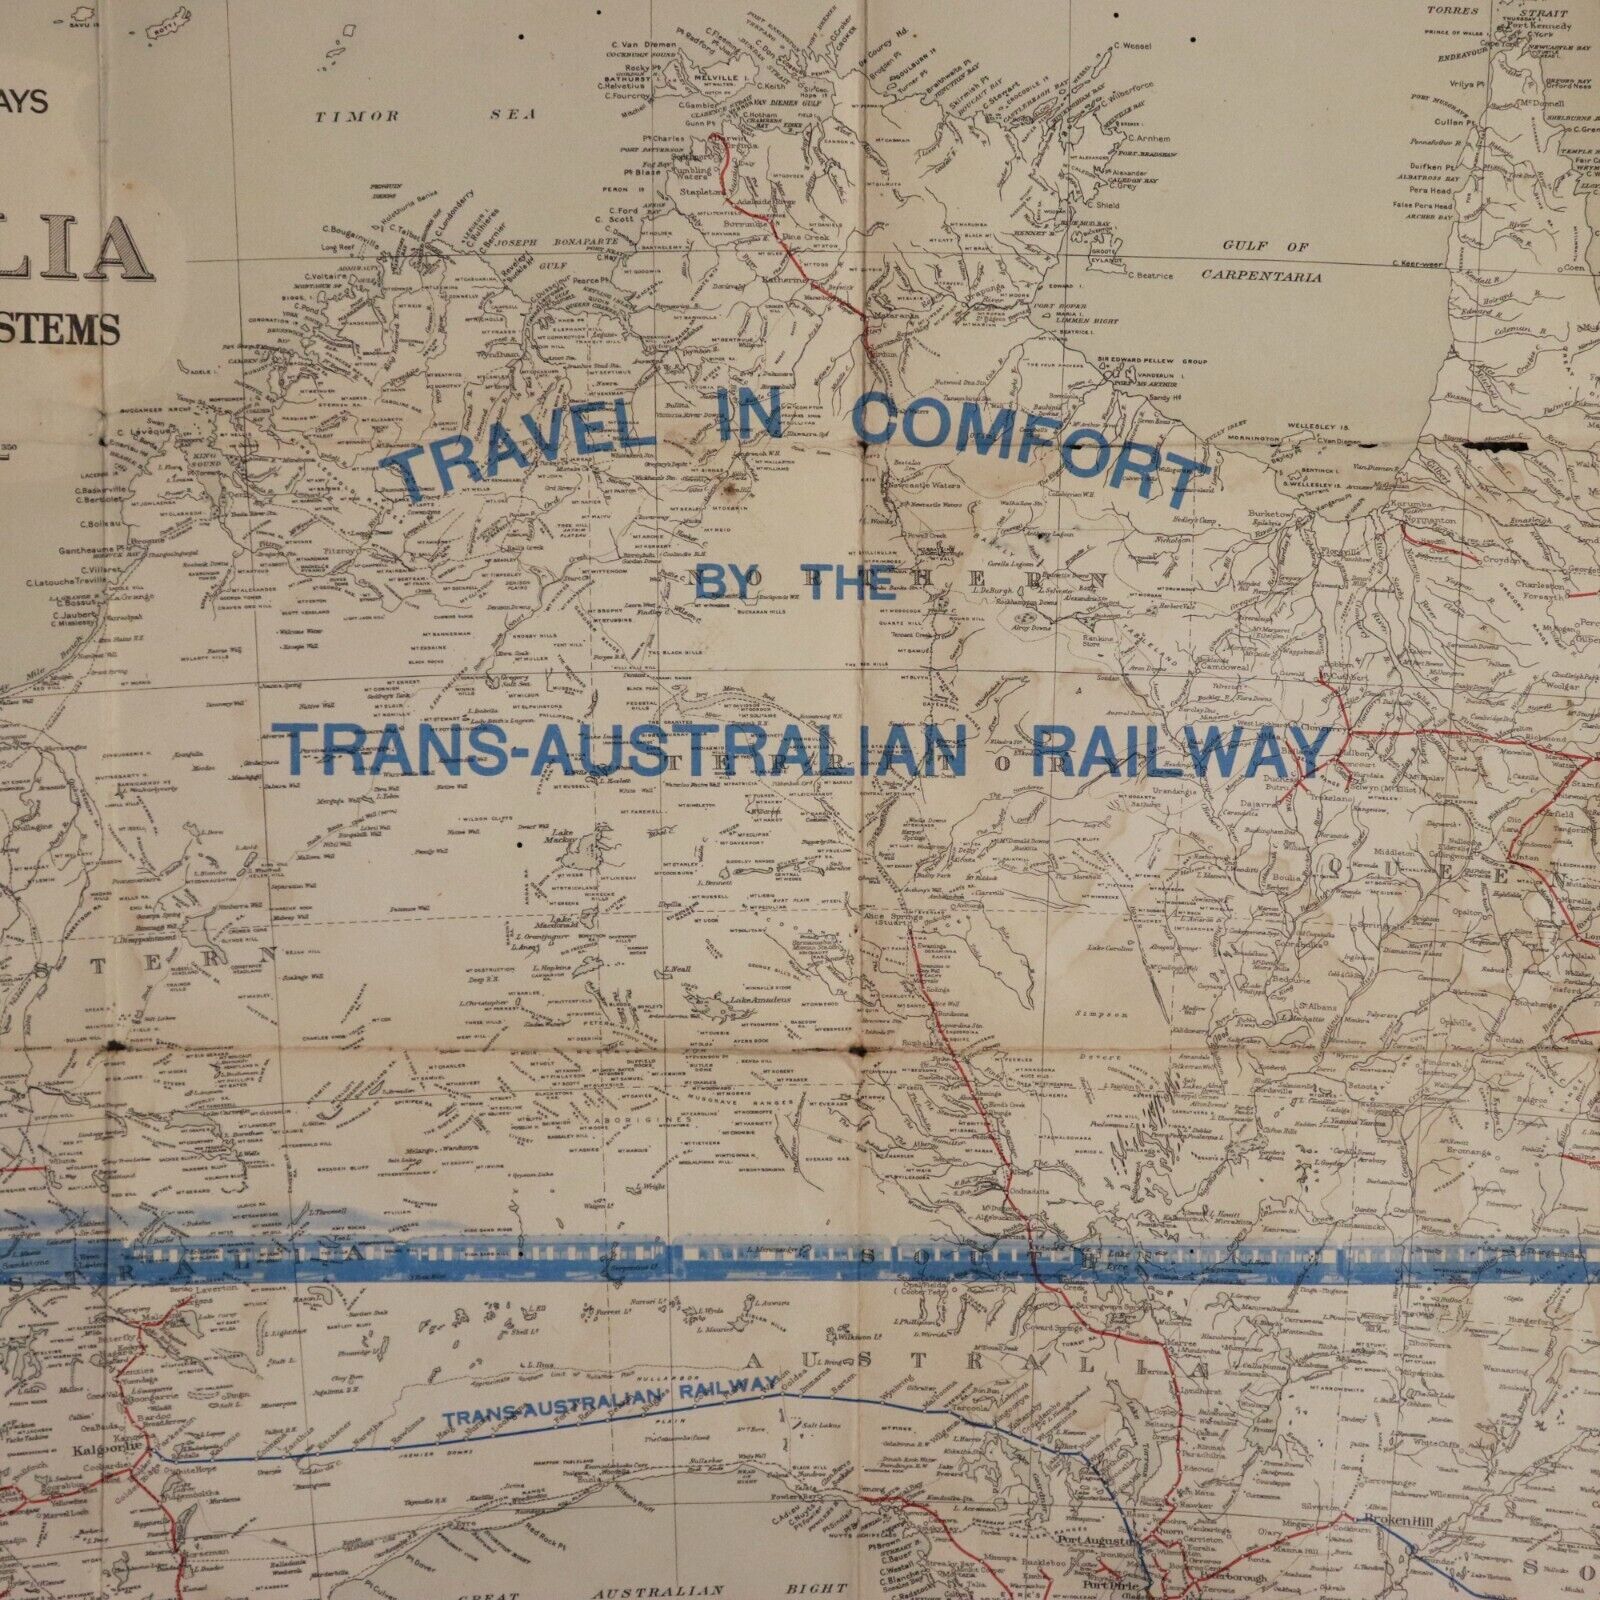 1944 Commonwealth Railways Map Of Australia Antique Trans-Australian Railway Map